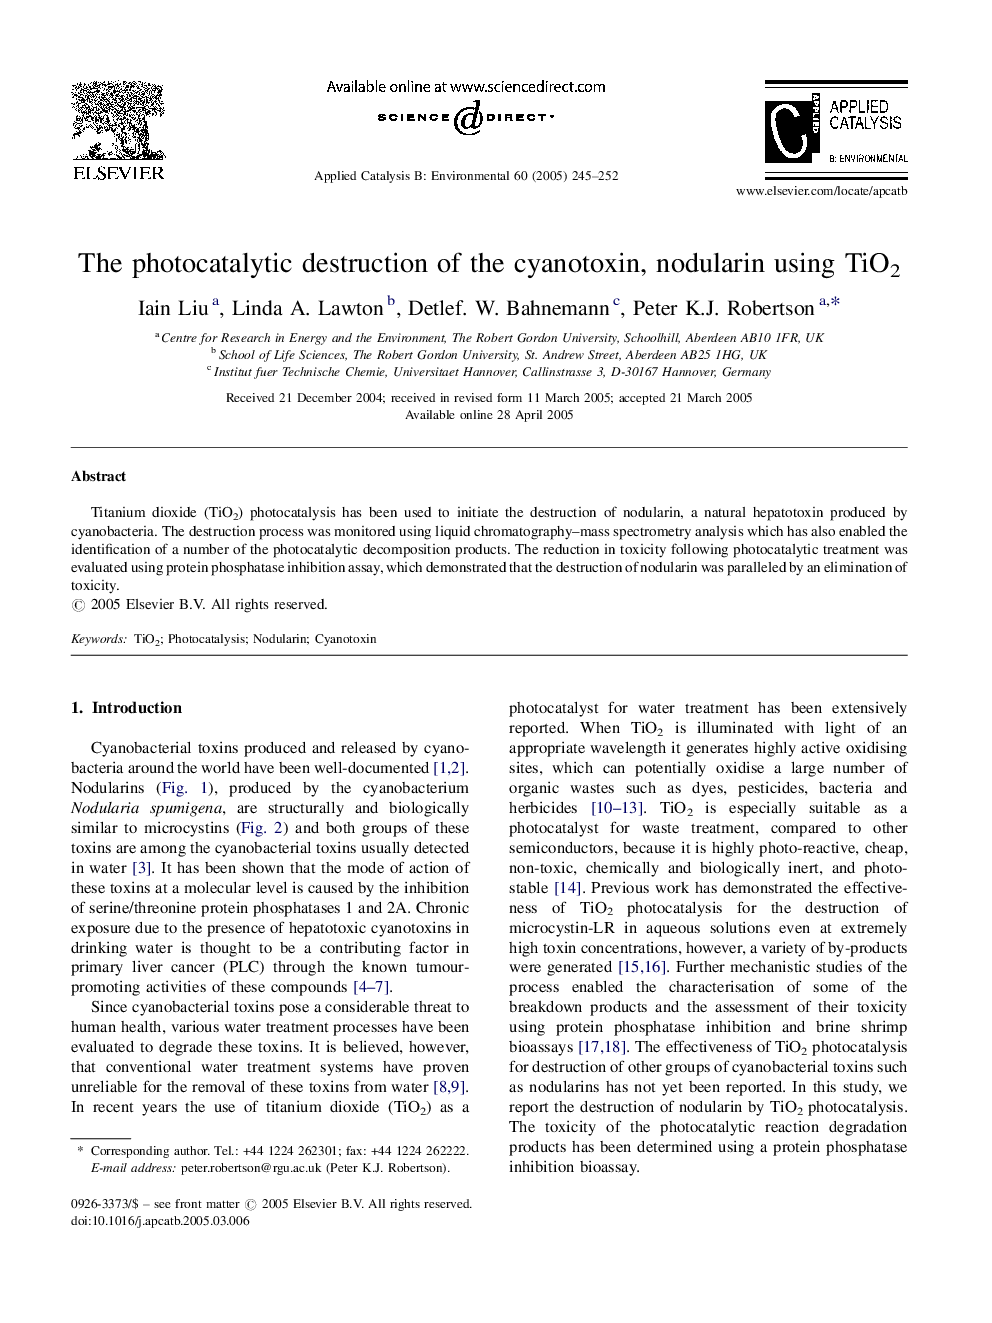 The photocatalytic destruction of the cyanotoxin, nodularin using TiO2